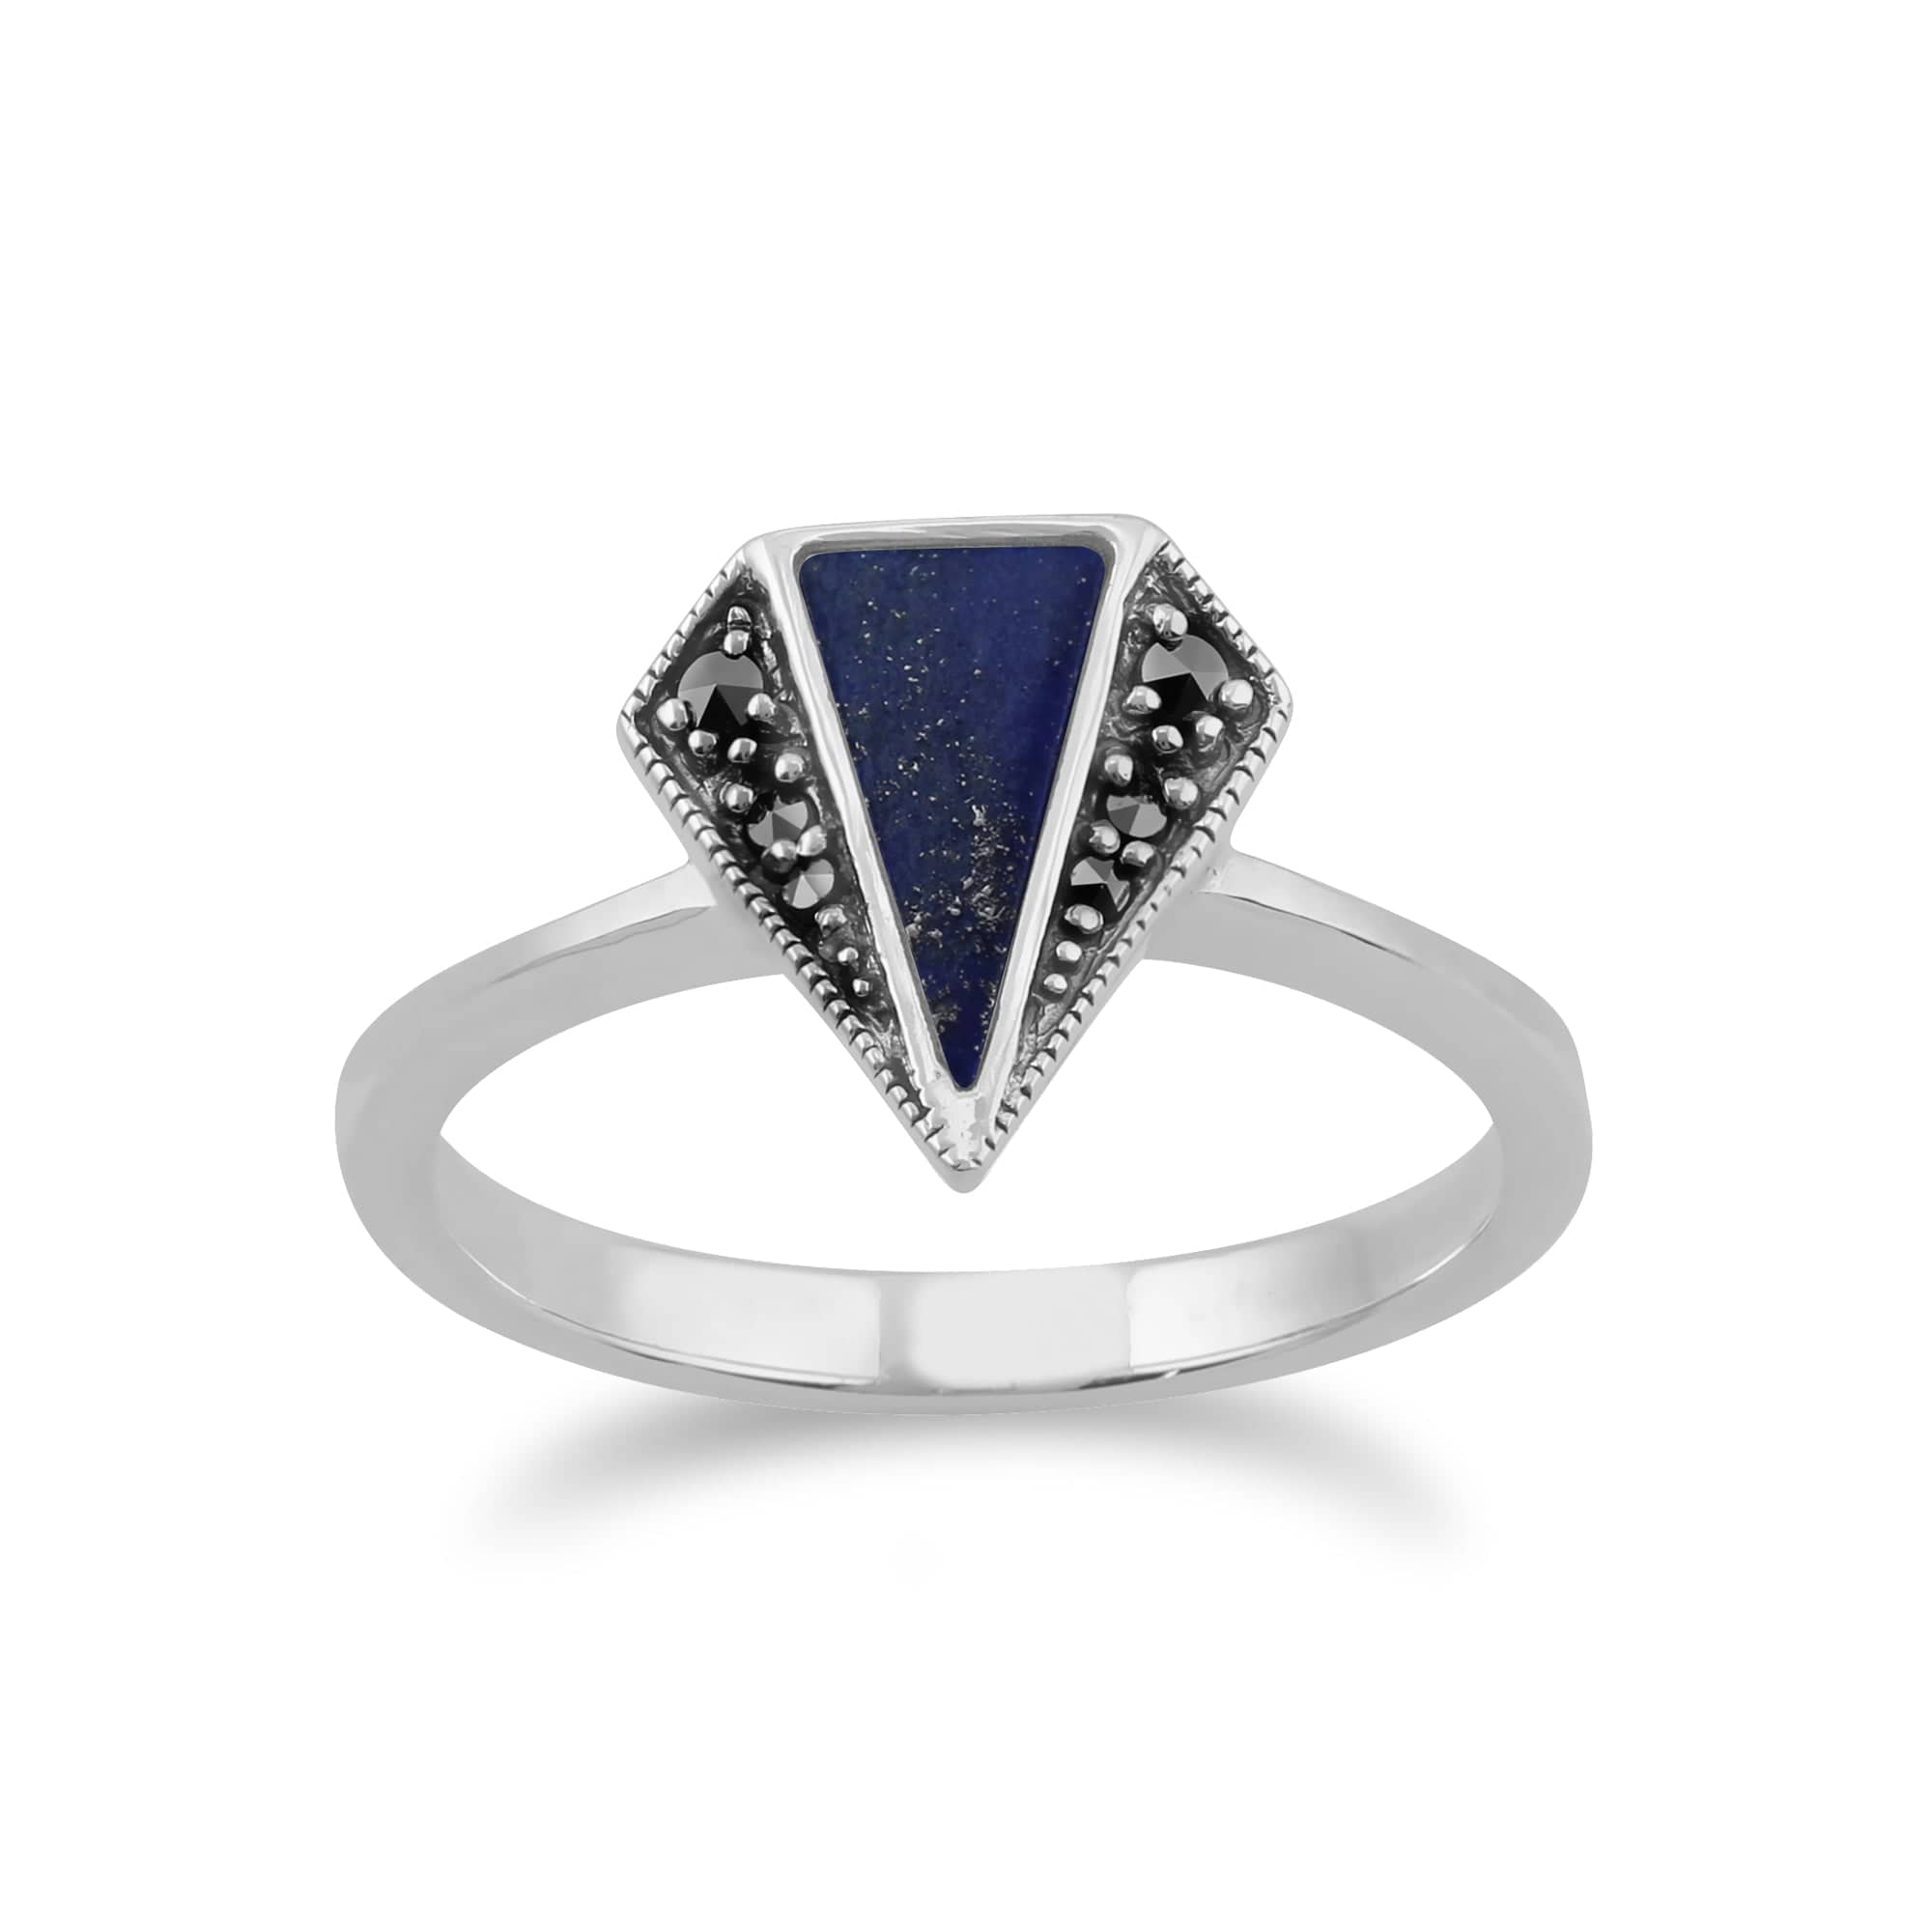 Gemondo 925 Sterling Silver Lapis Lazuli & Marcasite Art Deco Ring Image 1